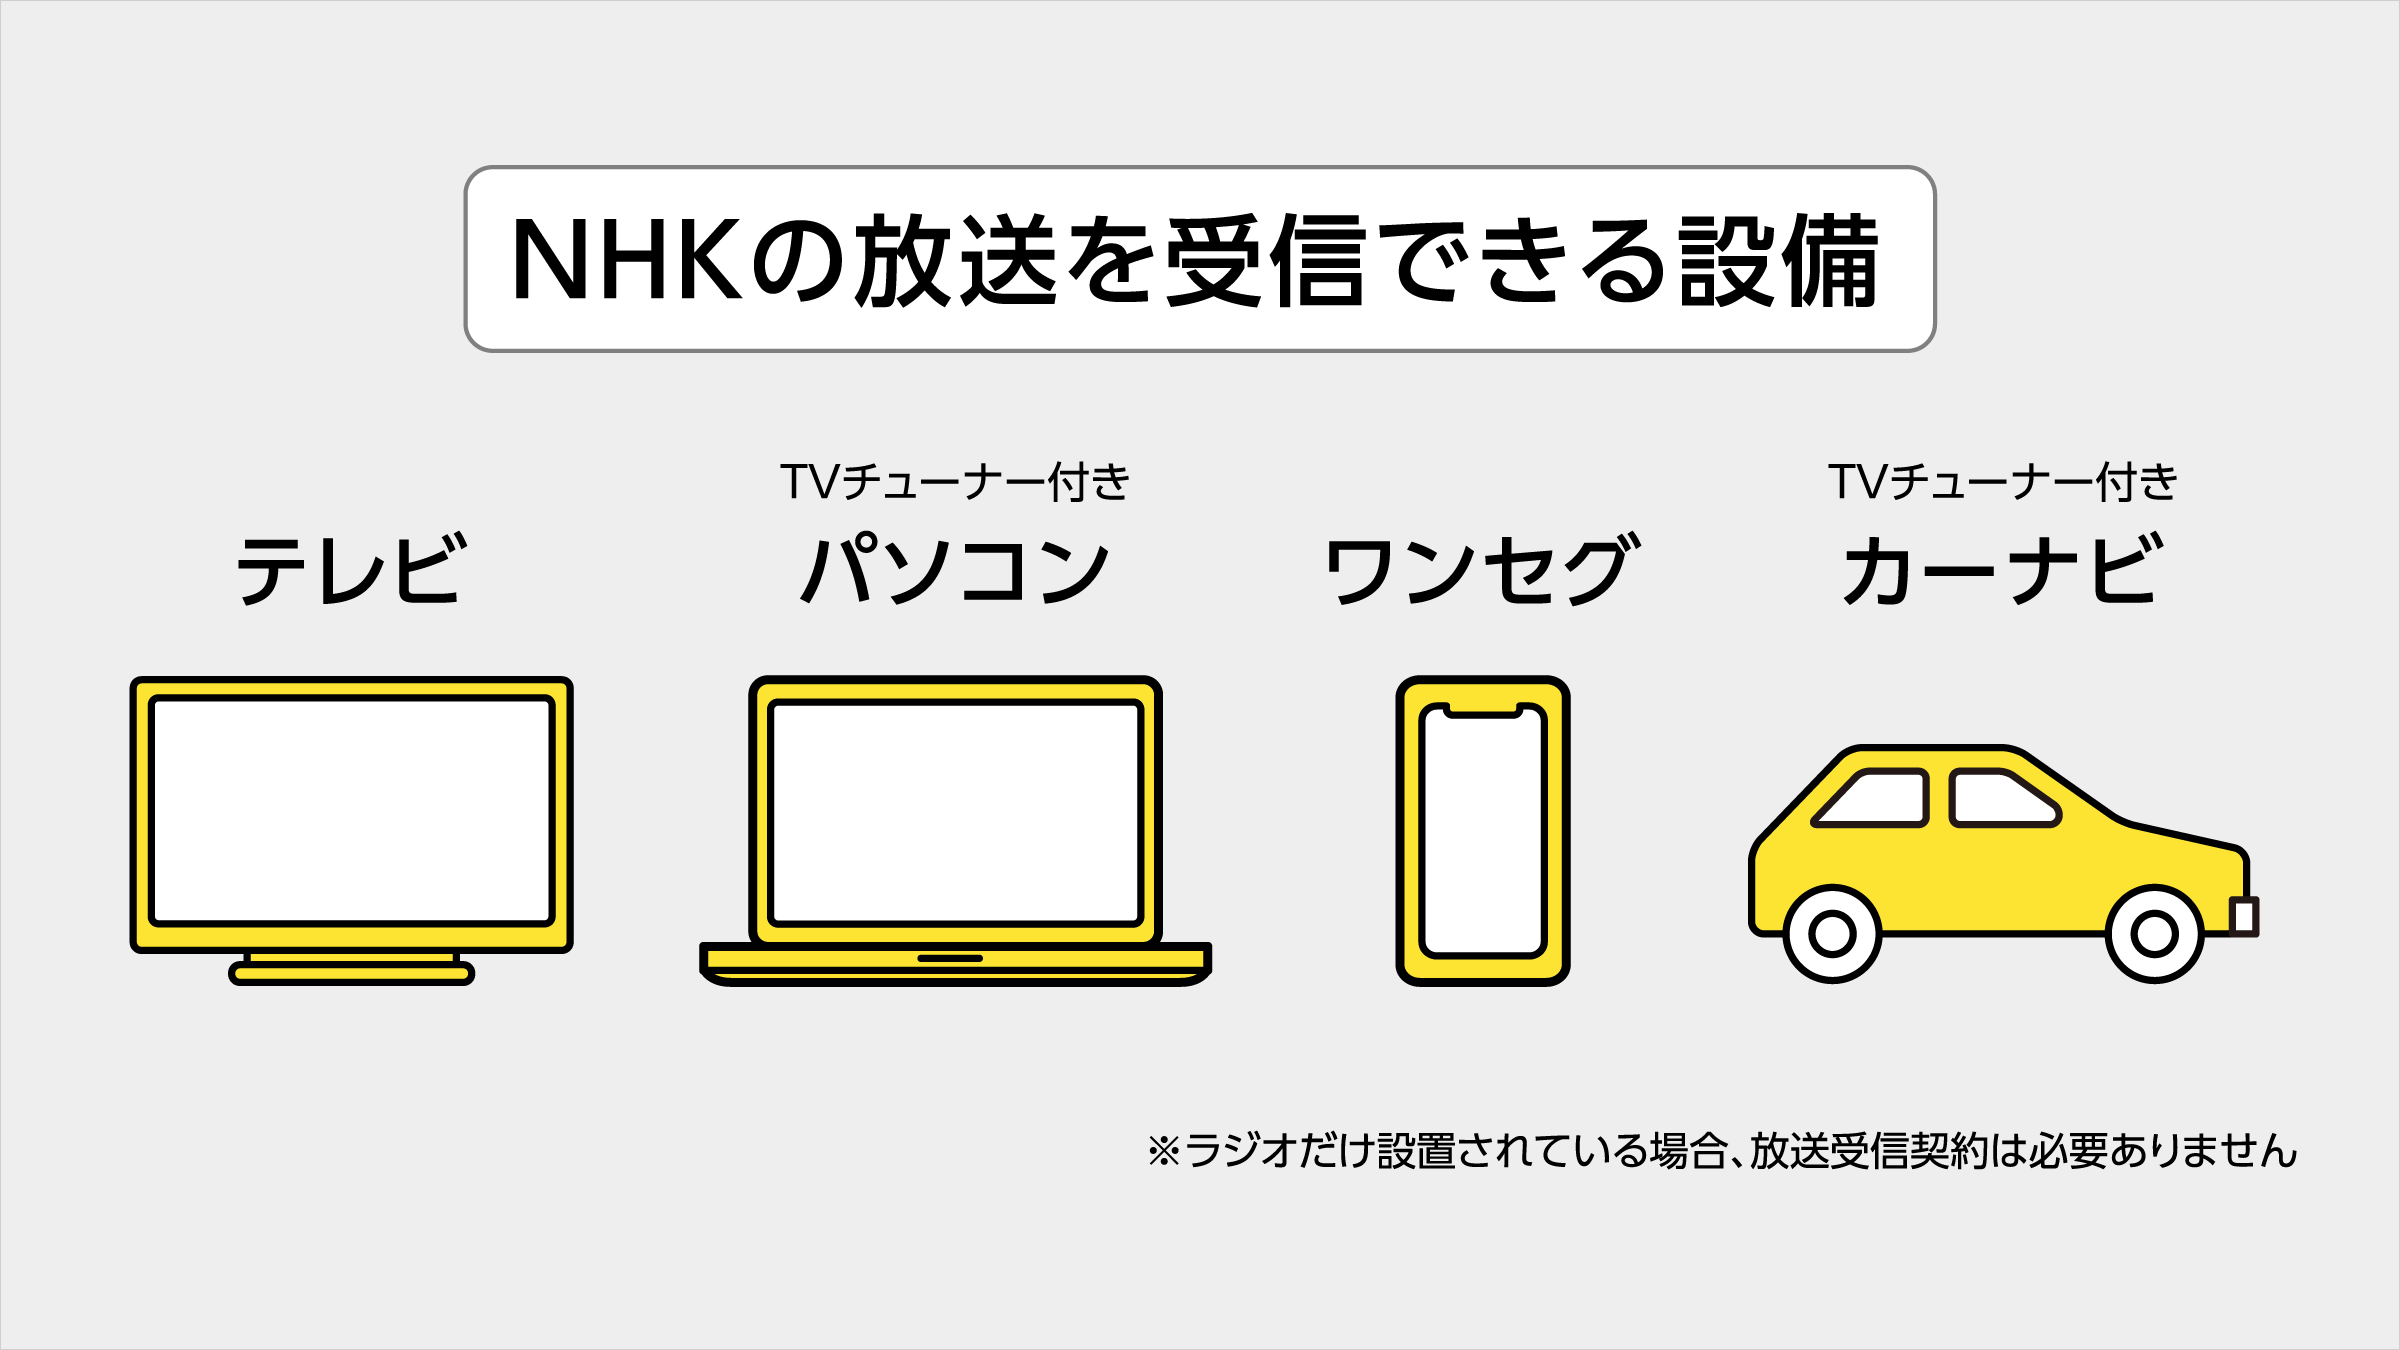 NHKの放送を受信できる設備のイメージ